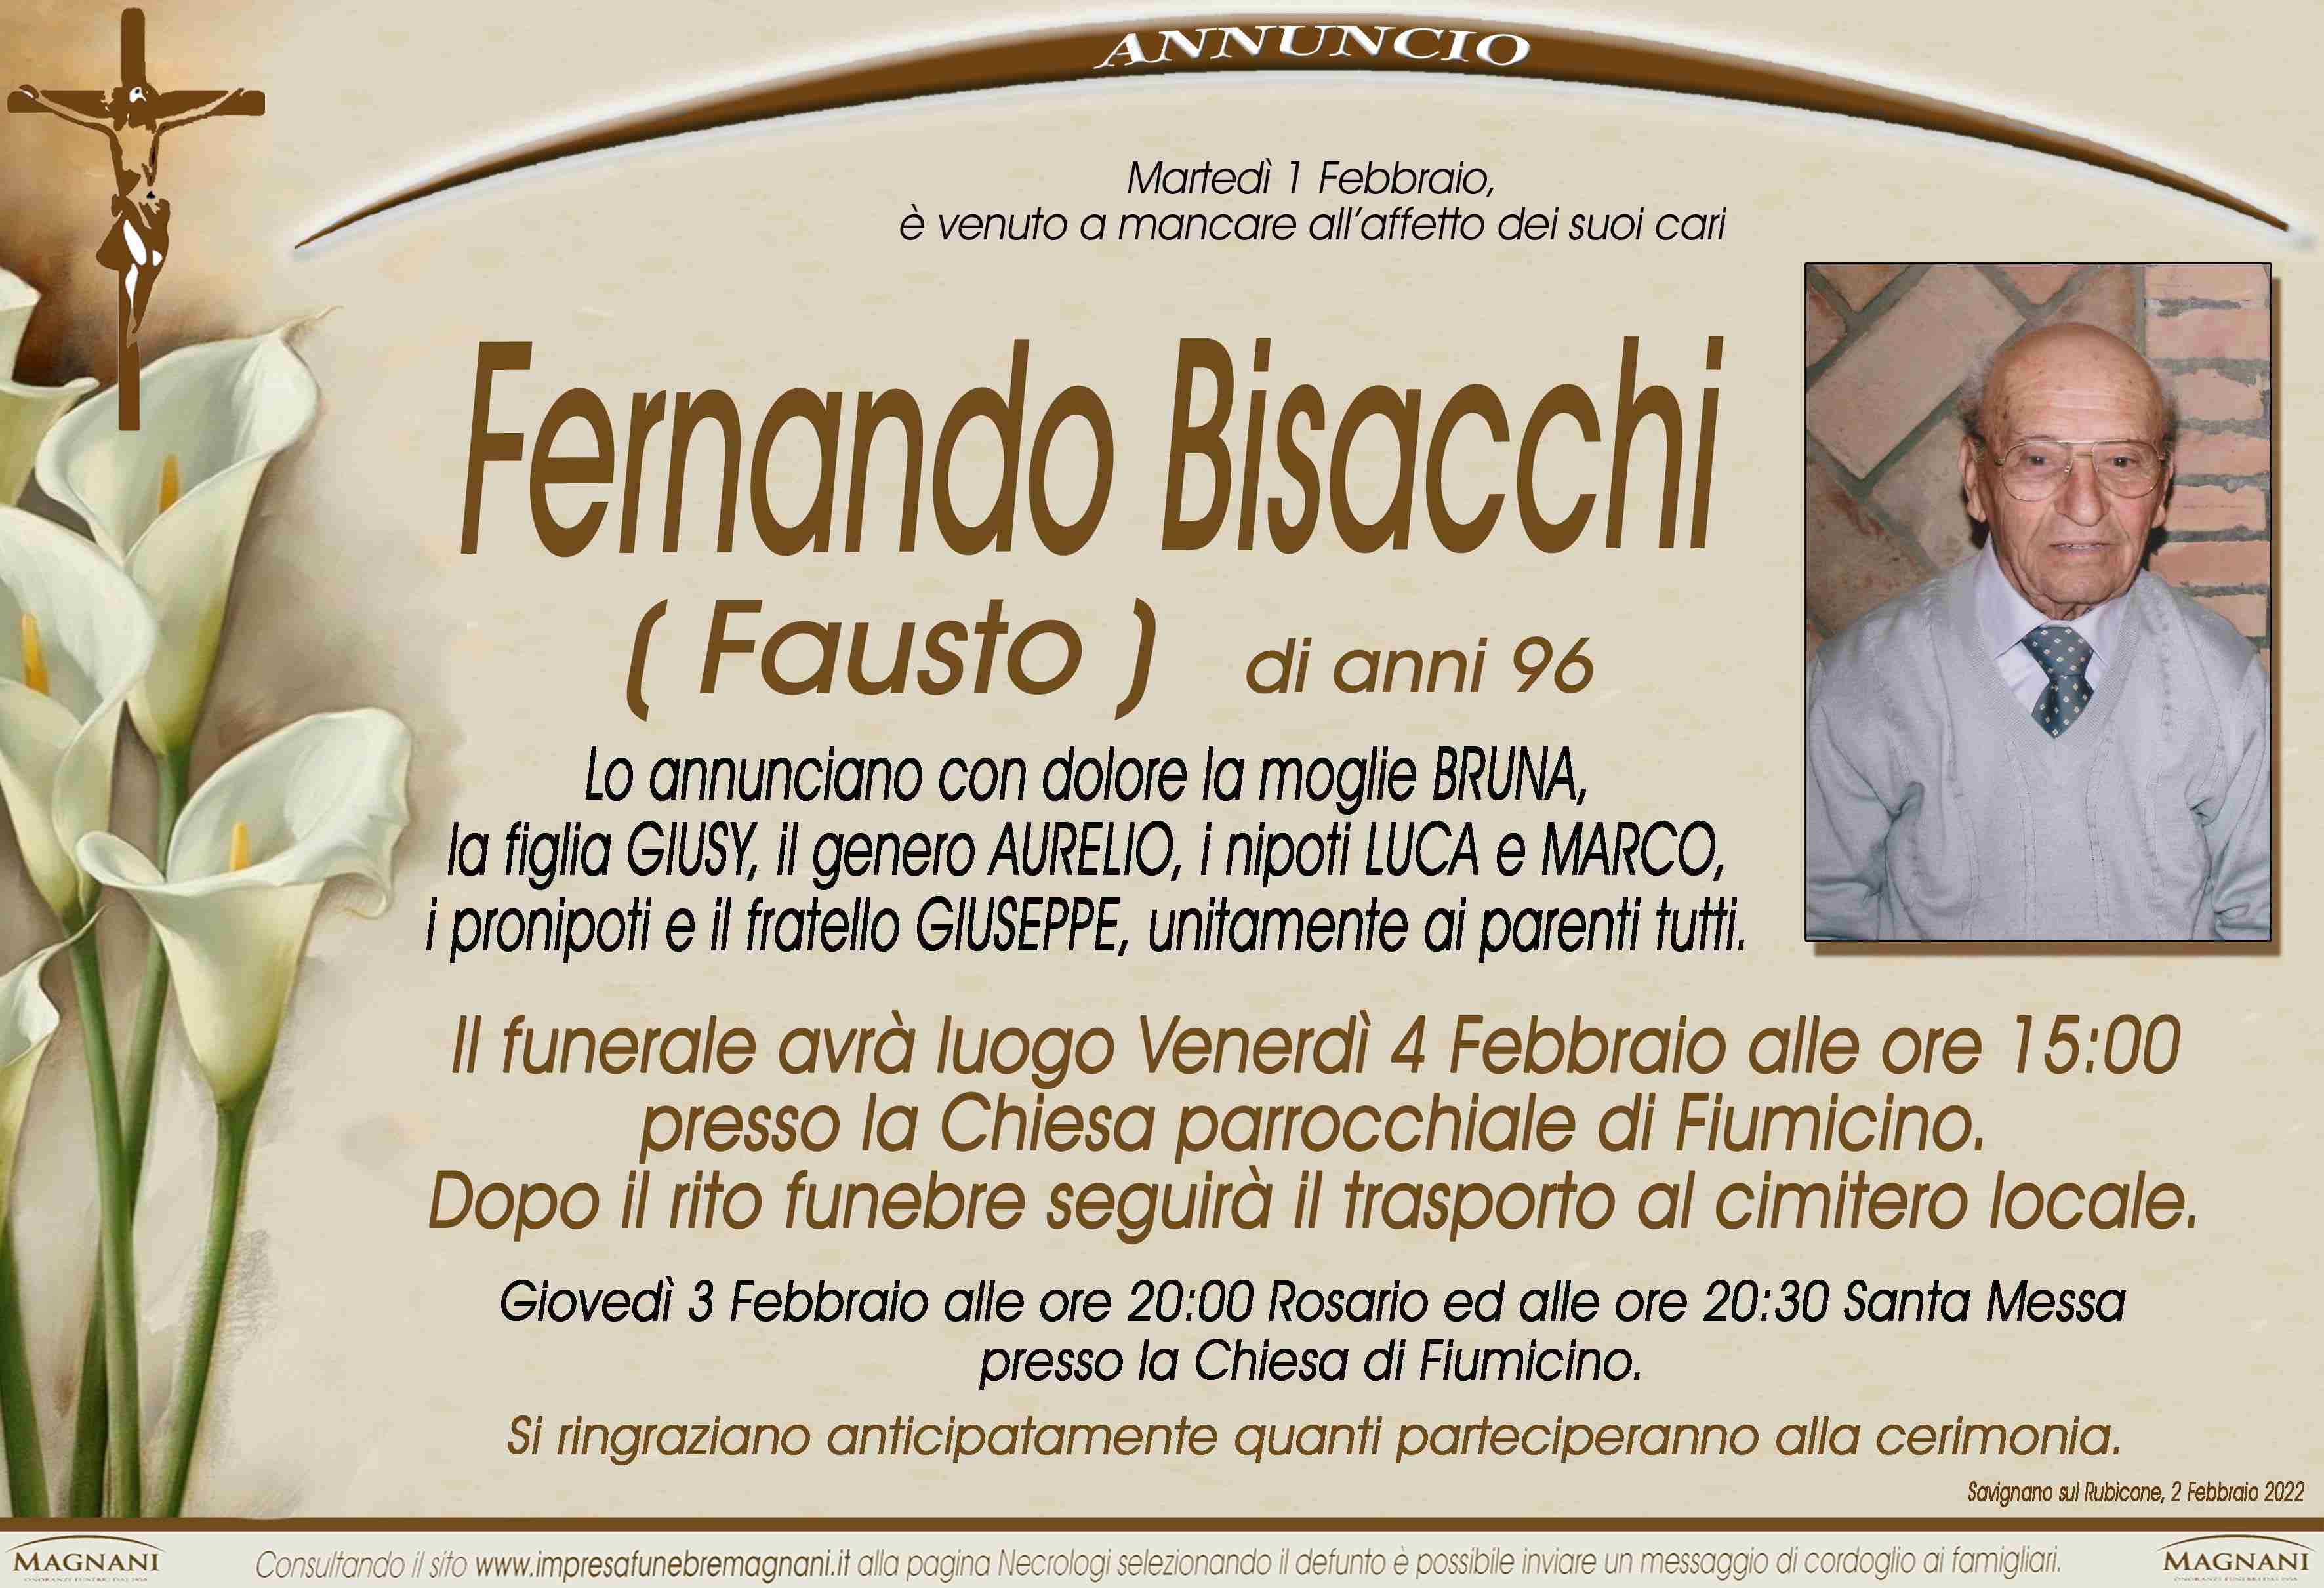 Fernando Bisacchi